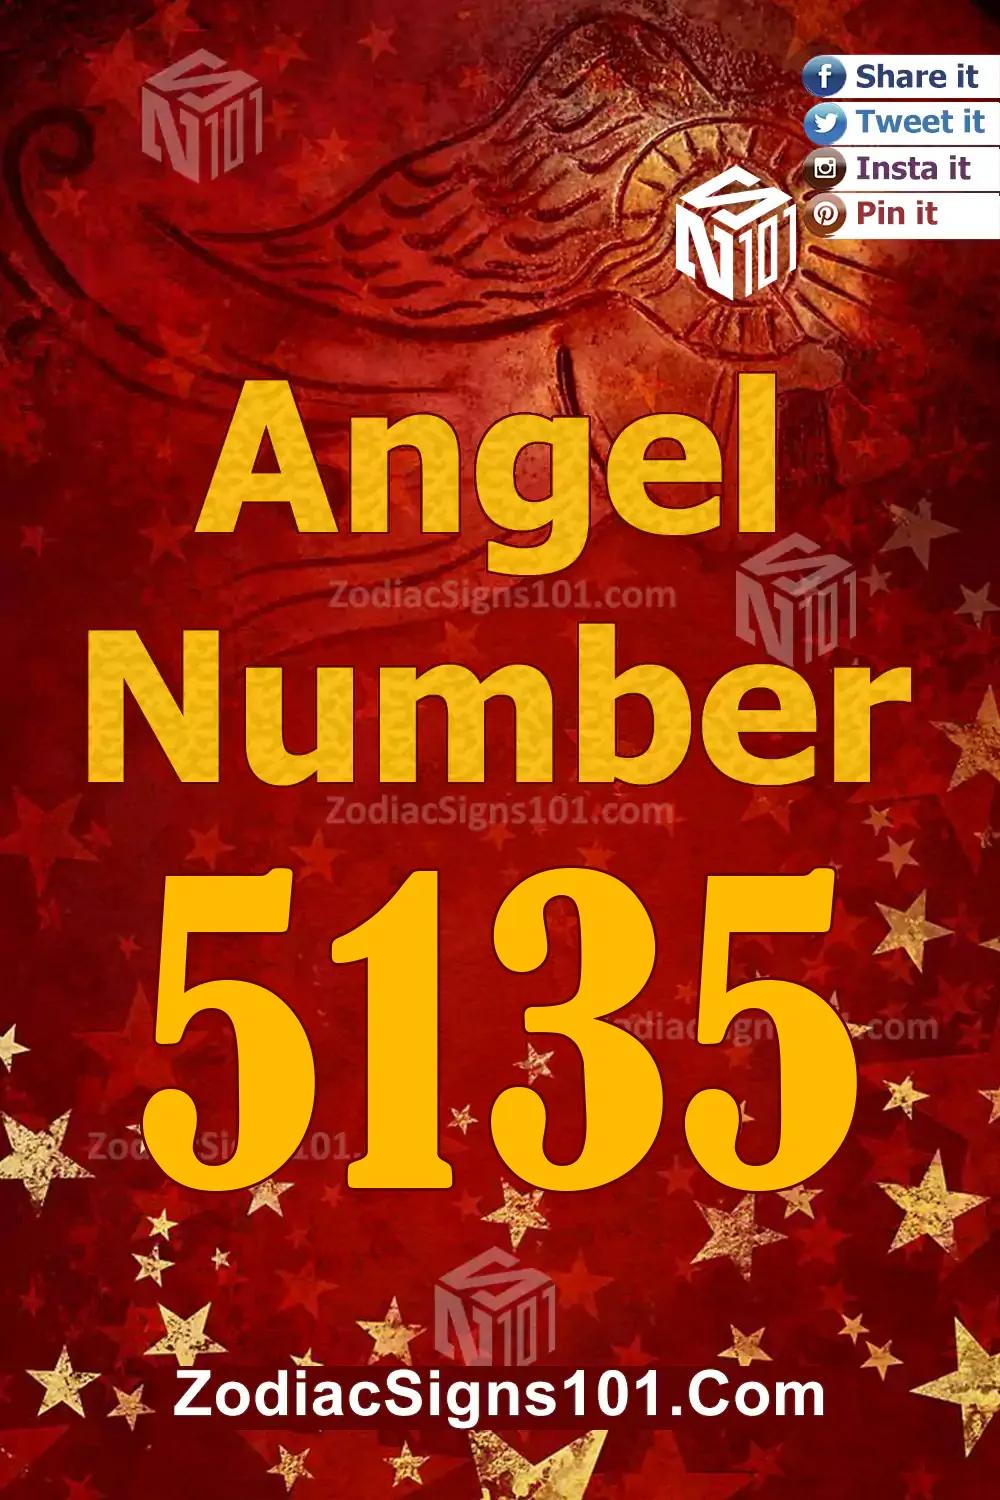 5135-Angel-Number-Meaning.jpg